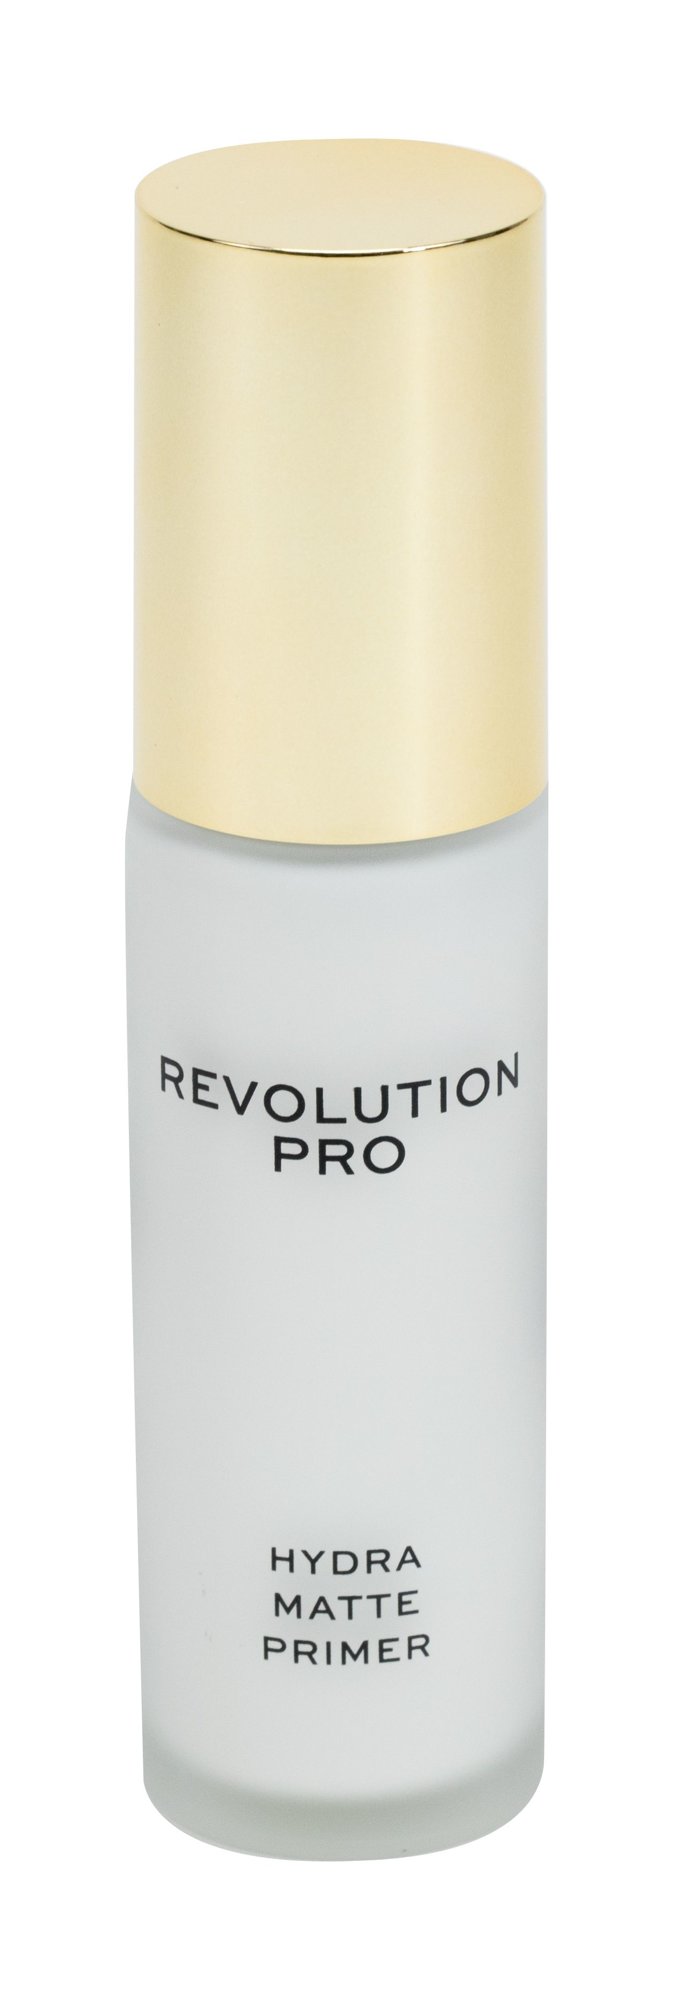 Makeup Revolution London Revolution PRO Hydra Matte Primer primeris